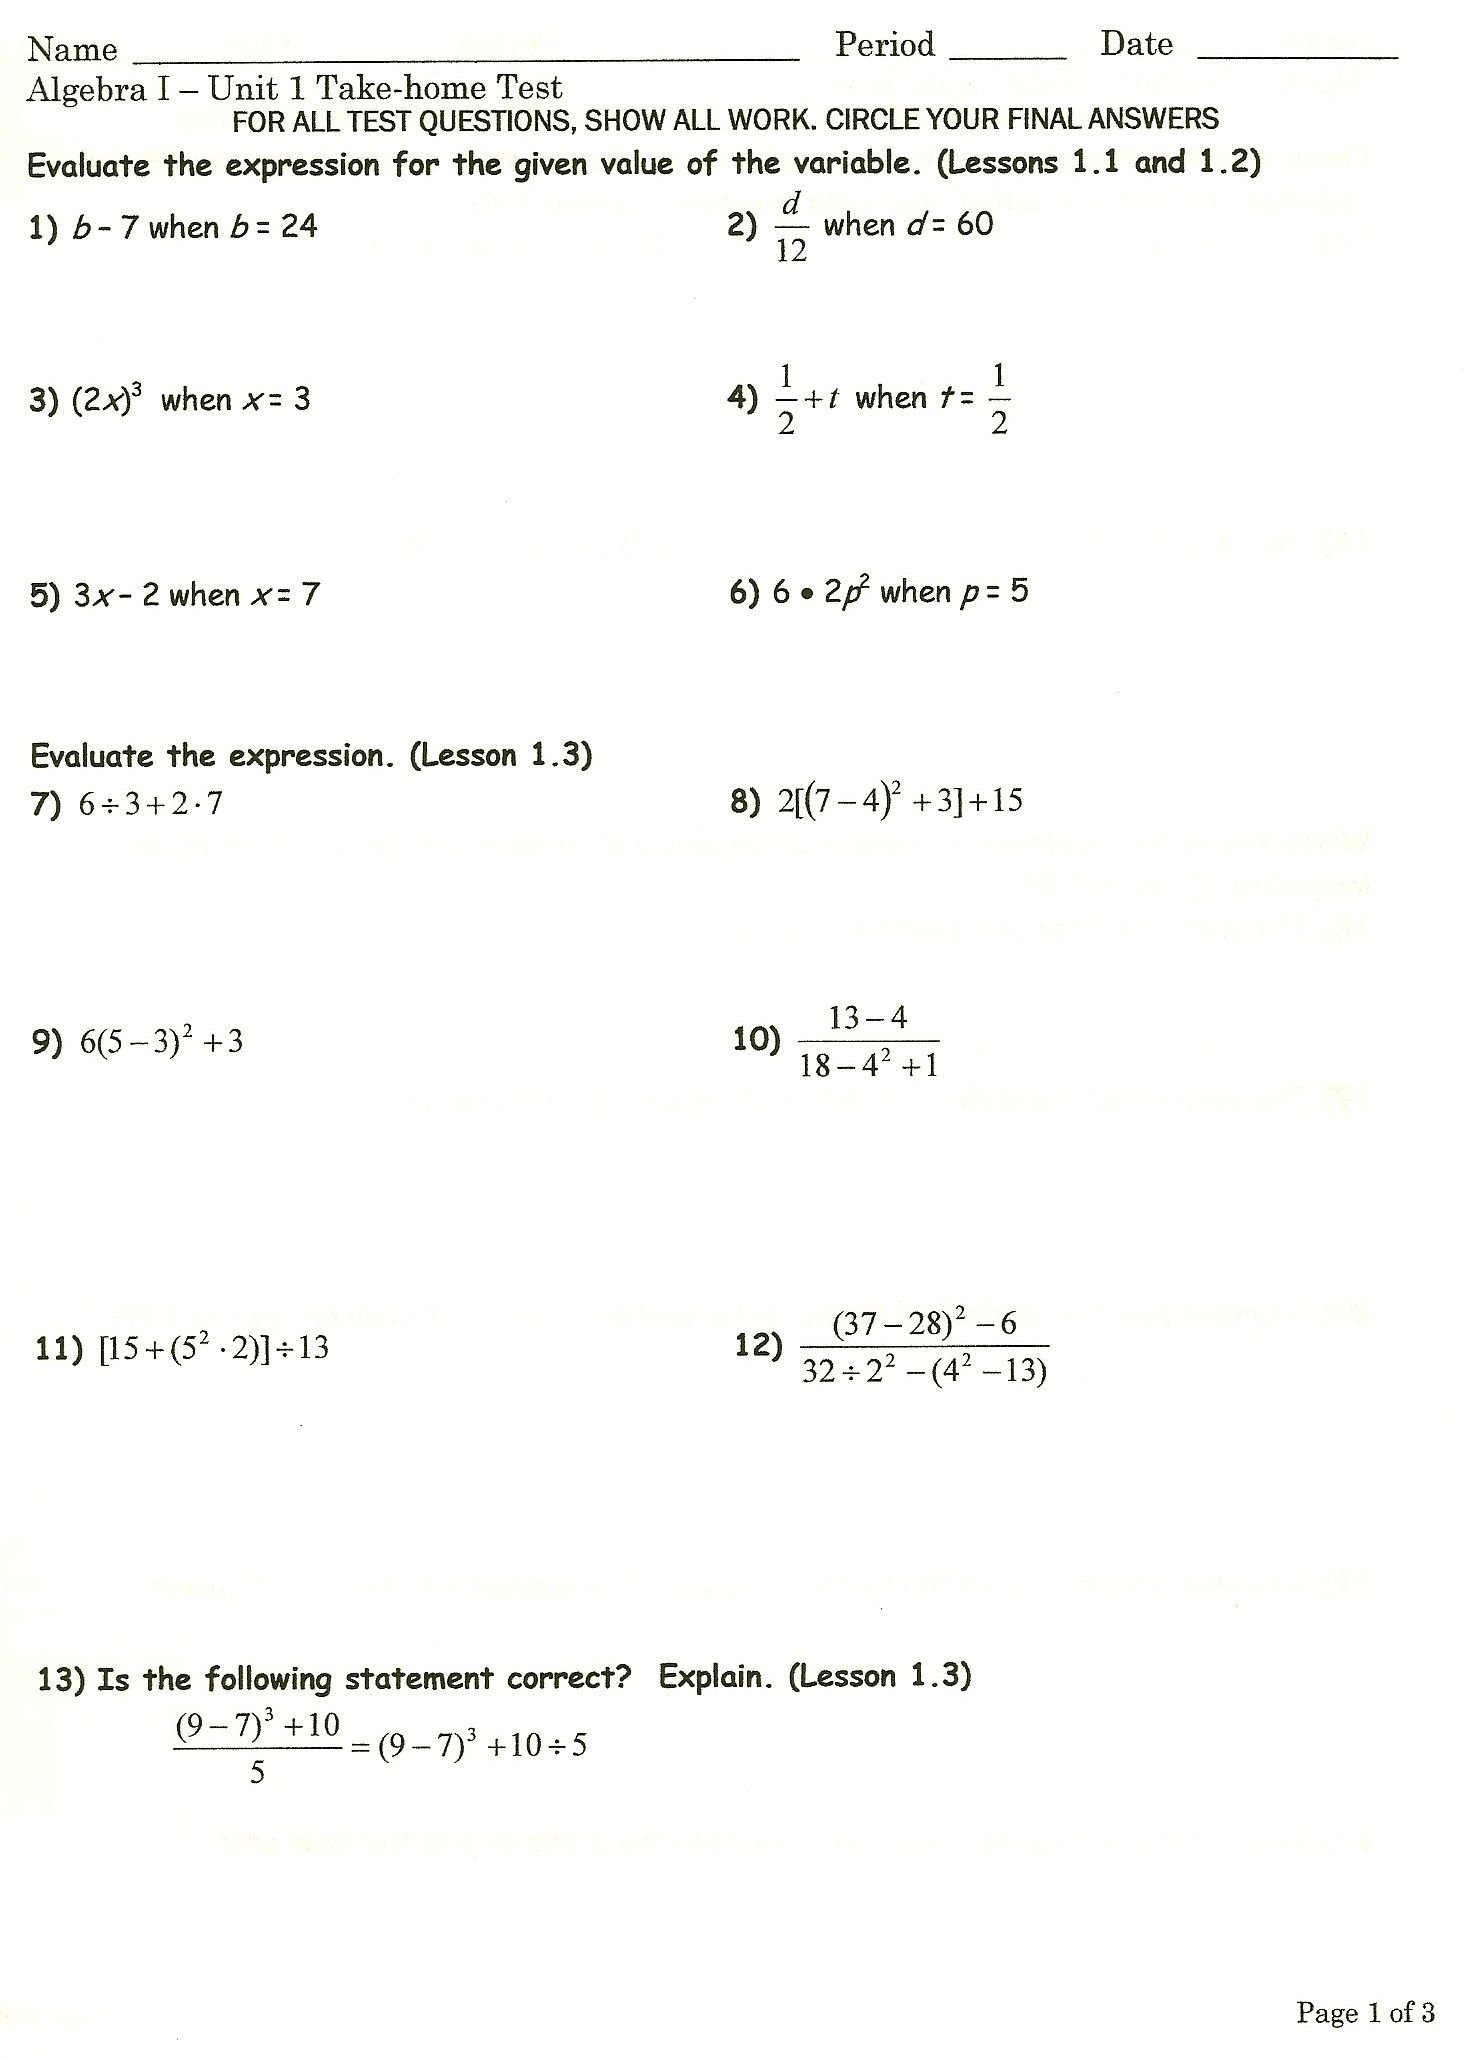 Linear Programming Worksheet Honors Algebra 2 Answers  Briefencounters And Linear Programming Worksheet Honors Algebra 2 Answers